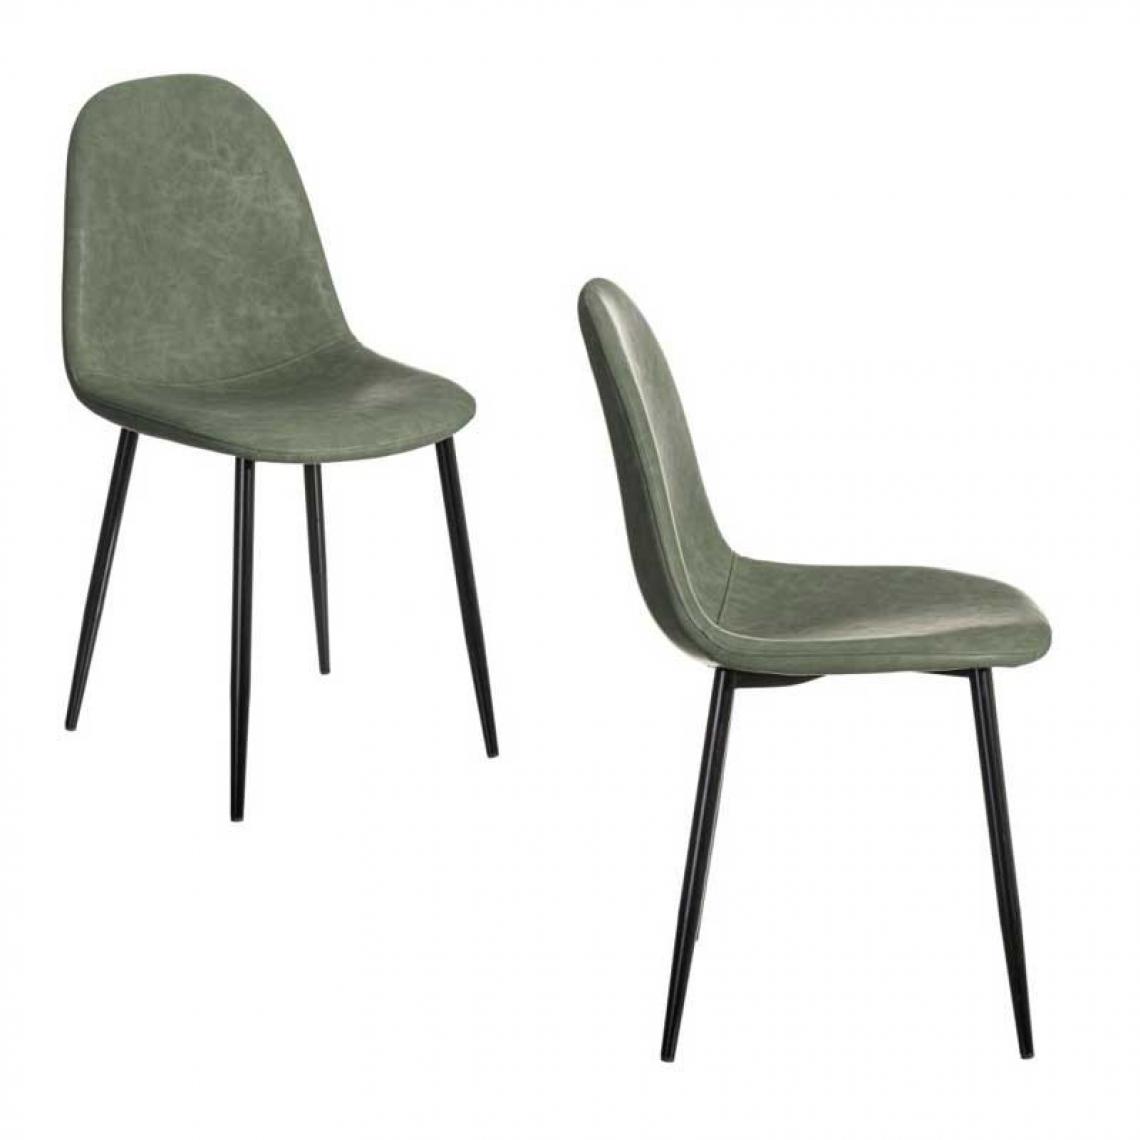 Tousmesmeubles - Duo de chaises Simili Cuir Vert - NEECHE - Chaises